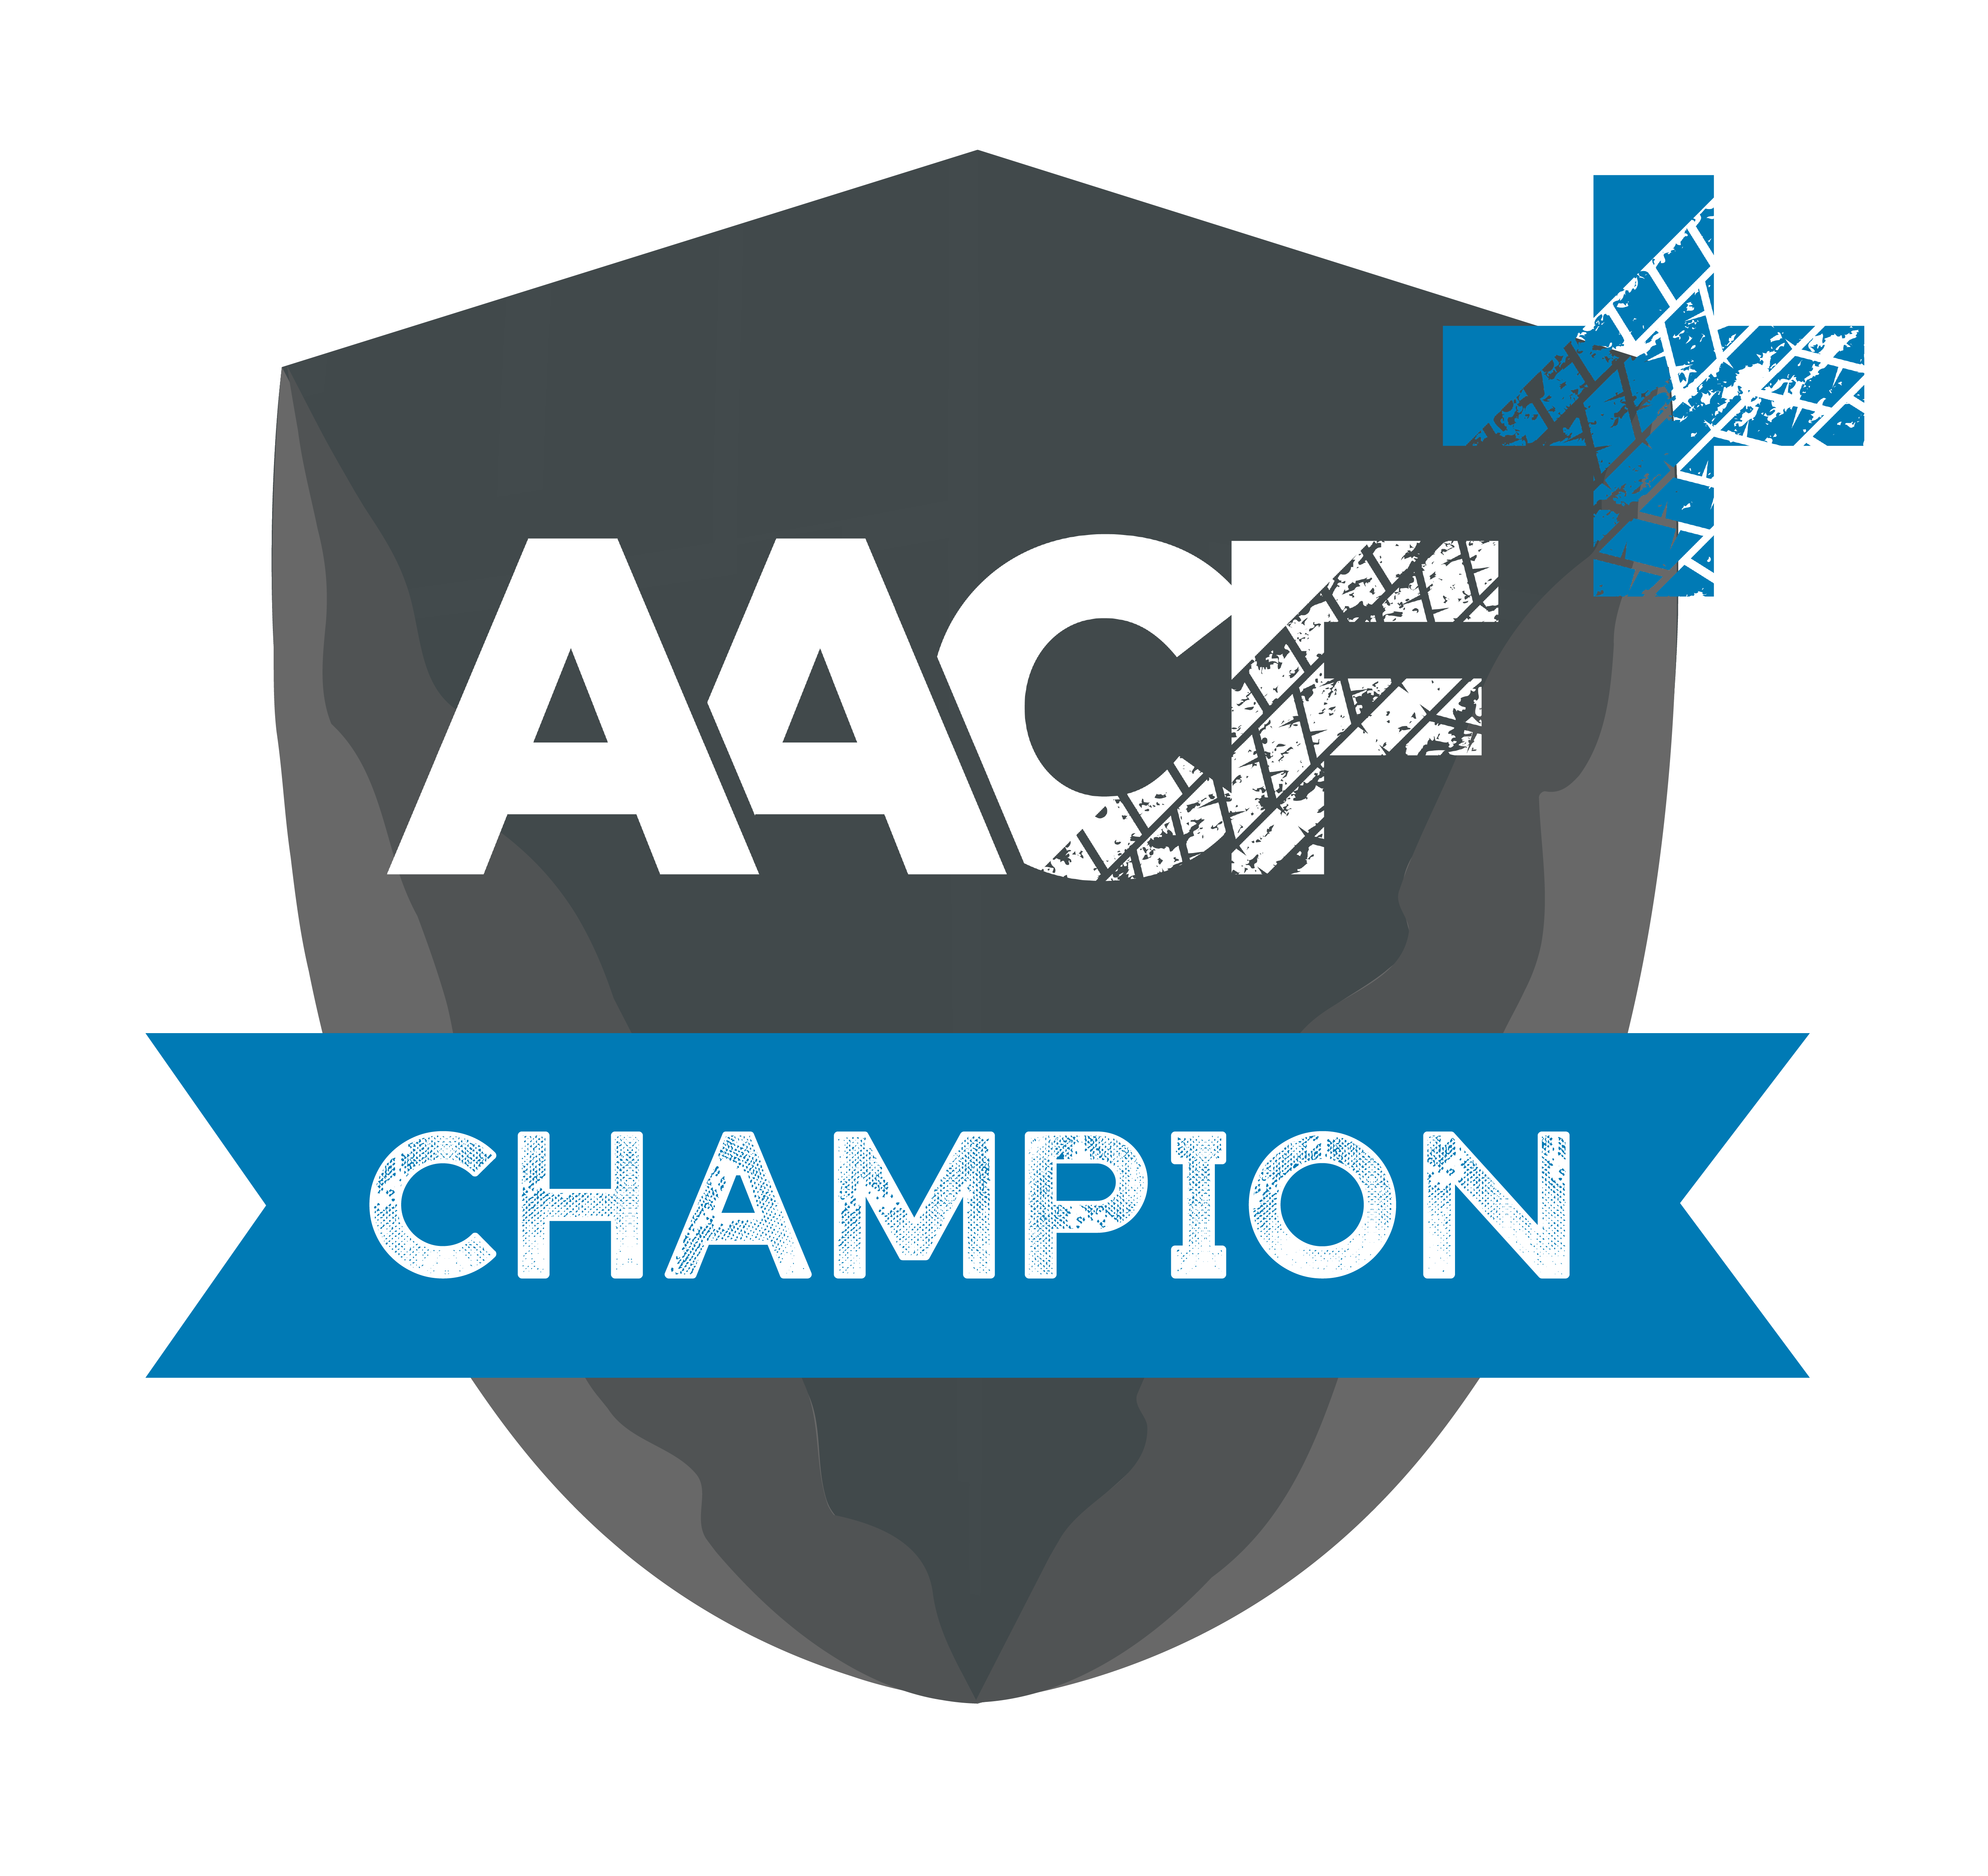 AACF Champion Program